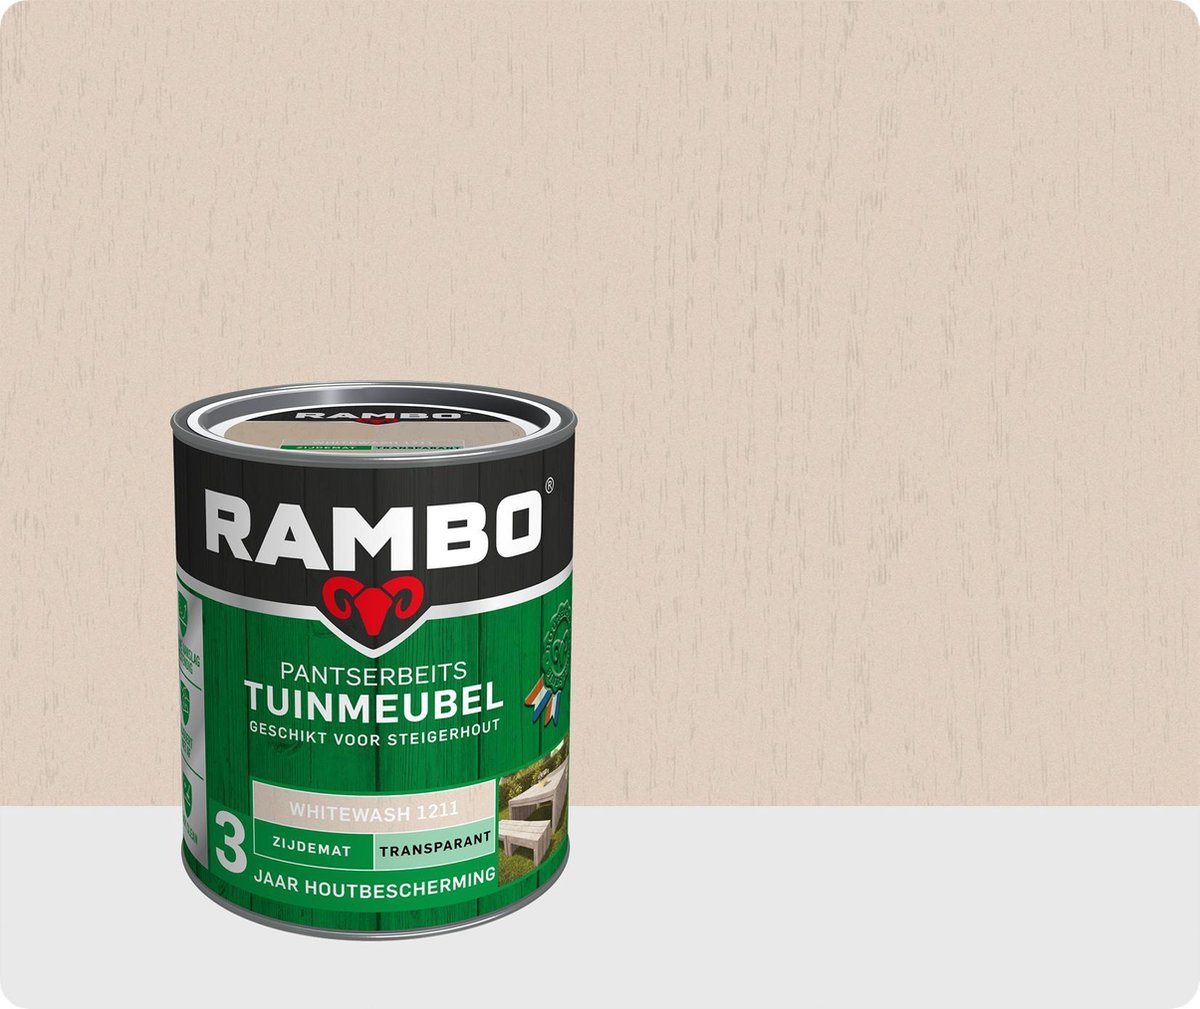 Rambo Tuinmeubel pantserbeits zijdemat transparant white wash 1211 750 ml |  bol.com